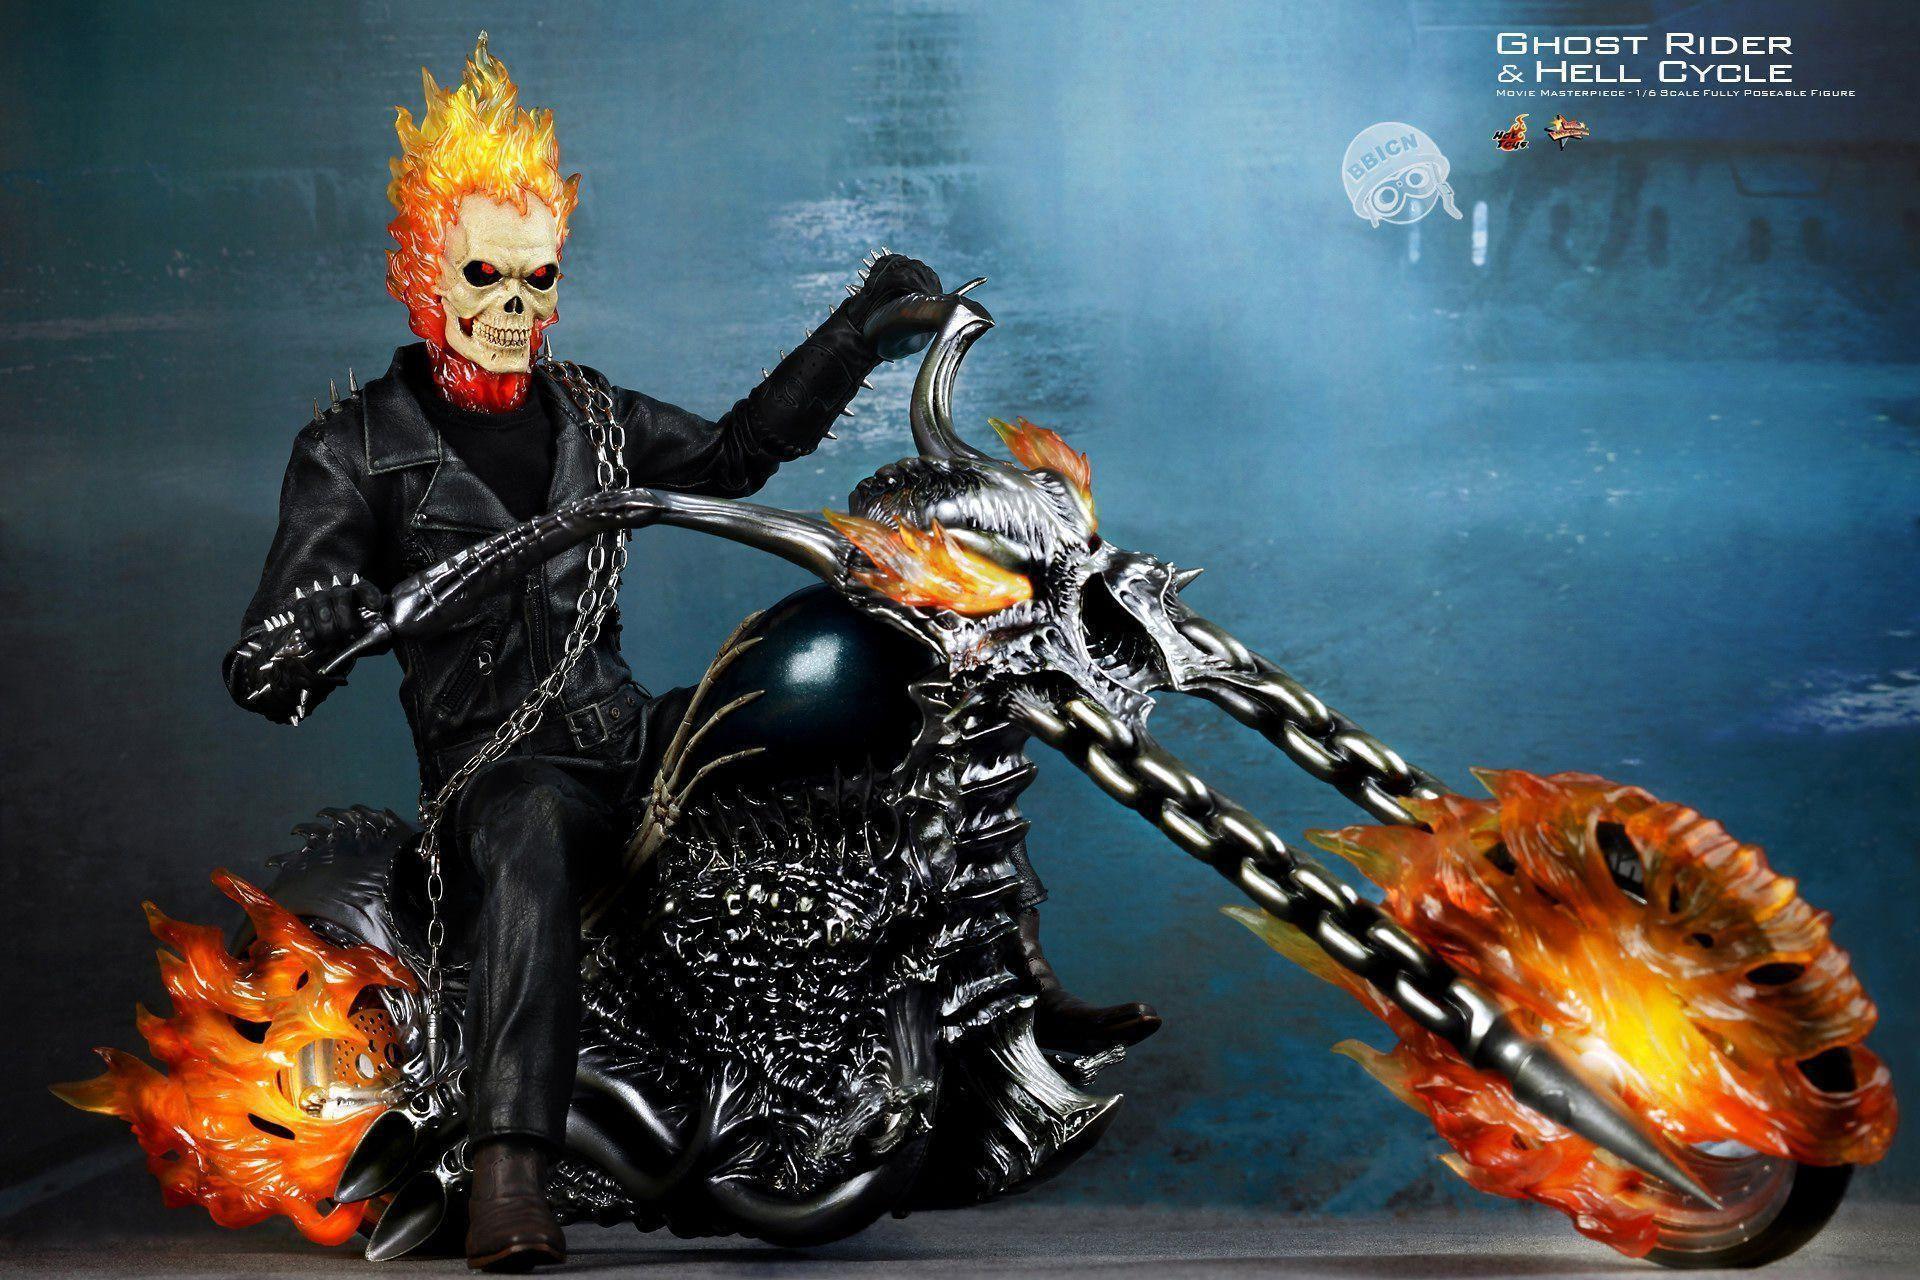 Ghost Rider Bike Wallpaper 21 HD Wallpaper Free